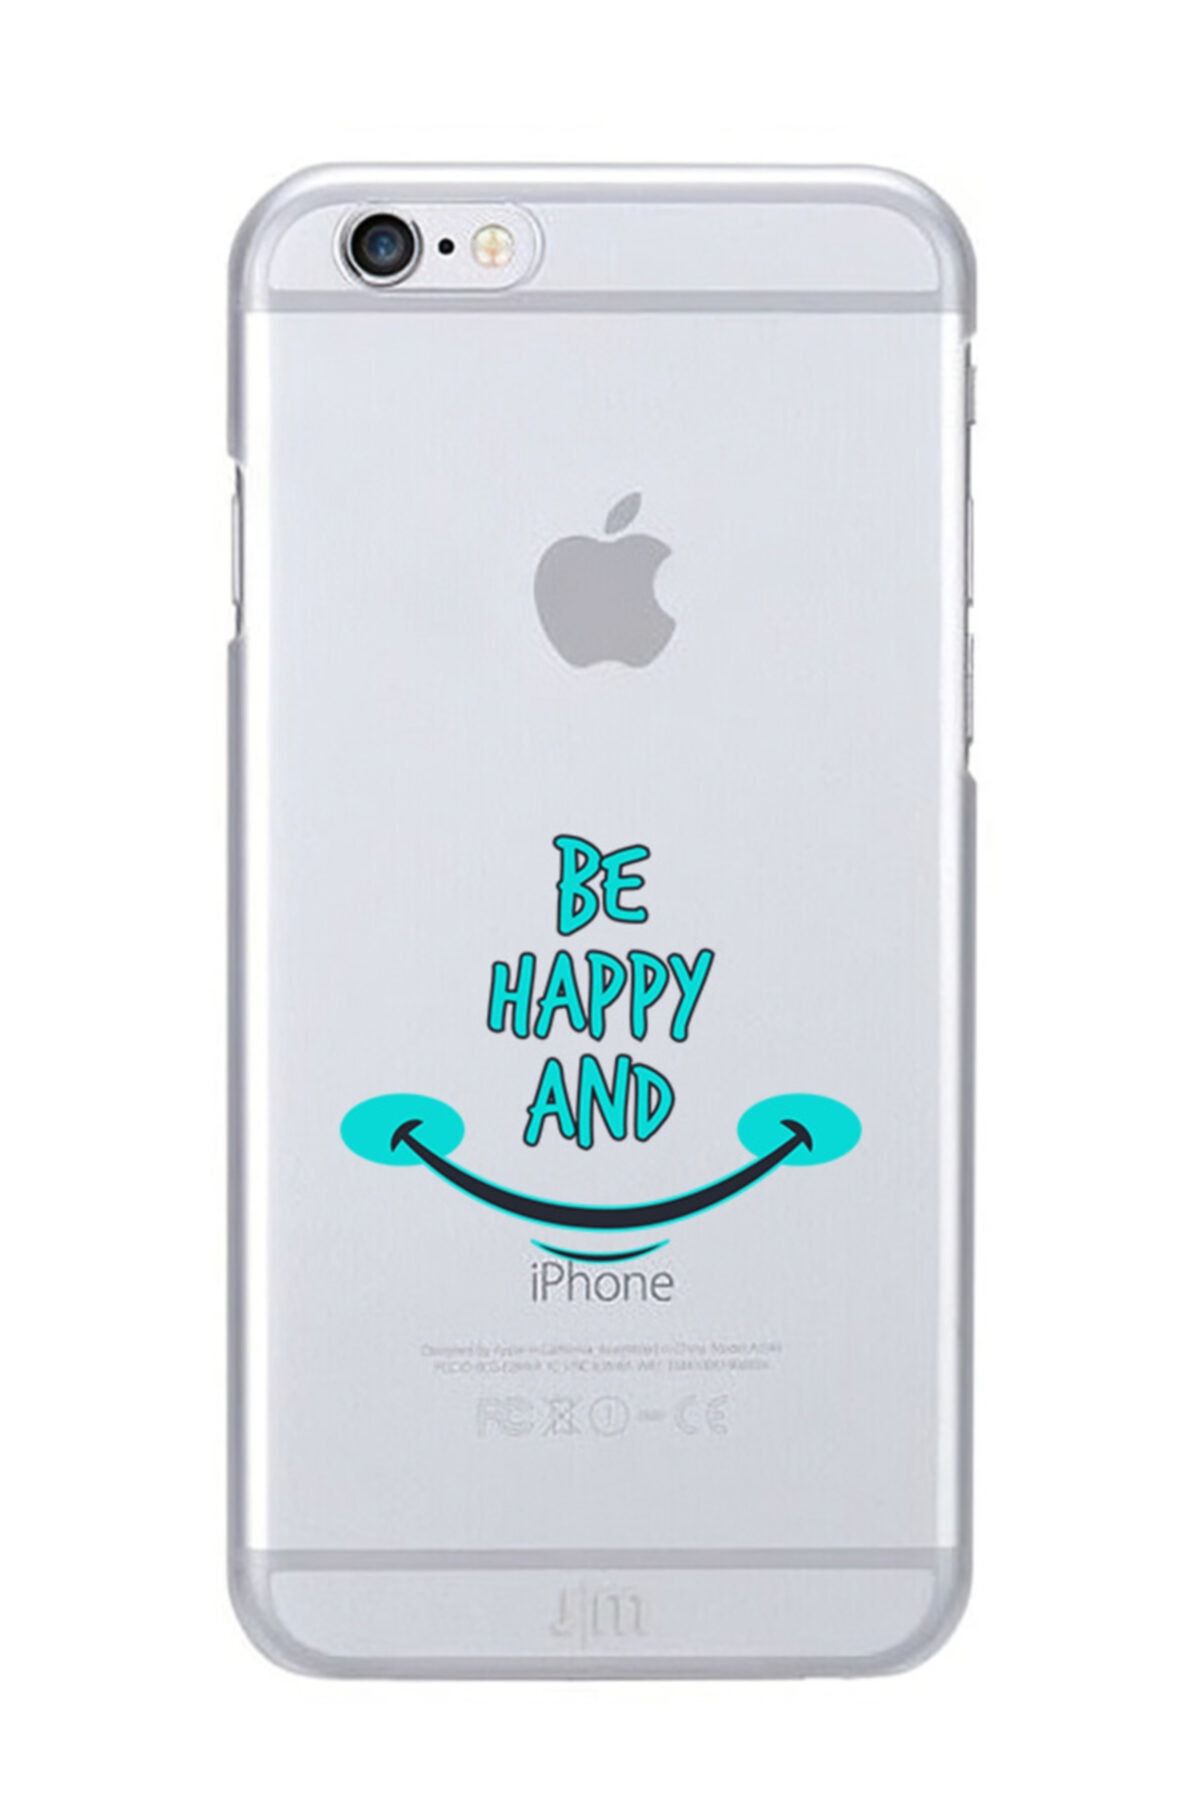 Dafhi Aksesuar Dafhi Apple Iphone 6 Be Happy And Telefon Kılıfı